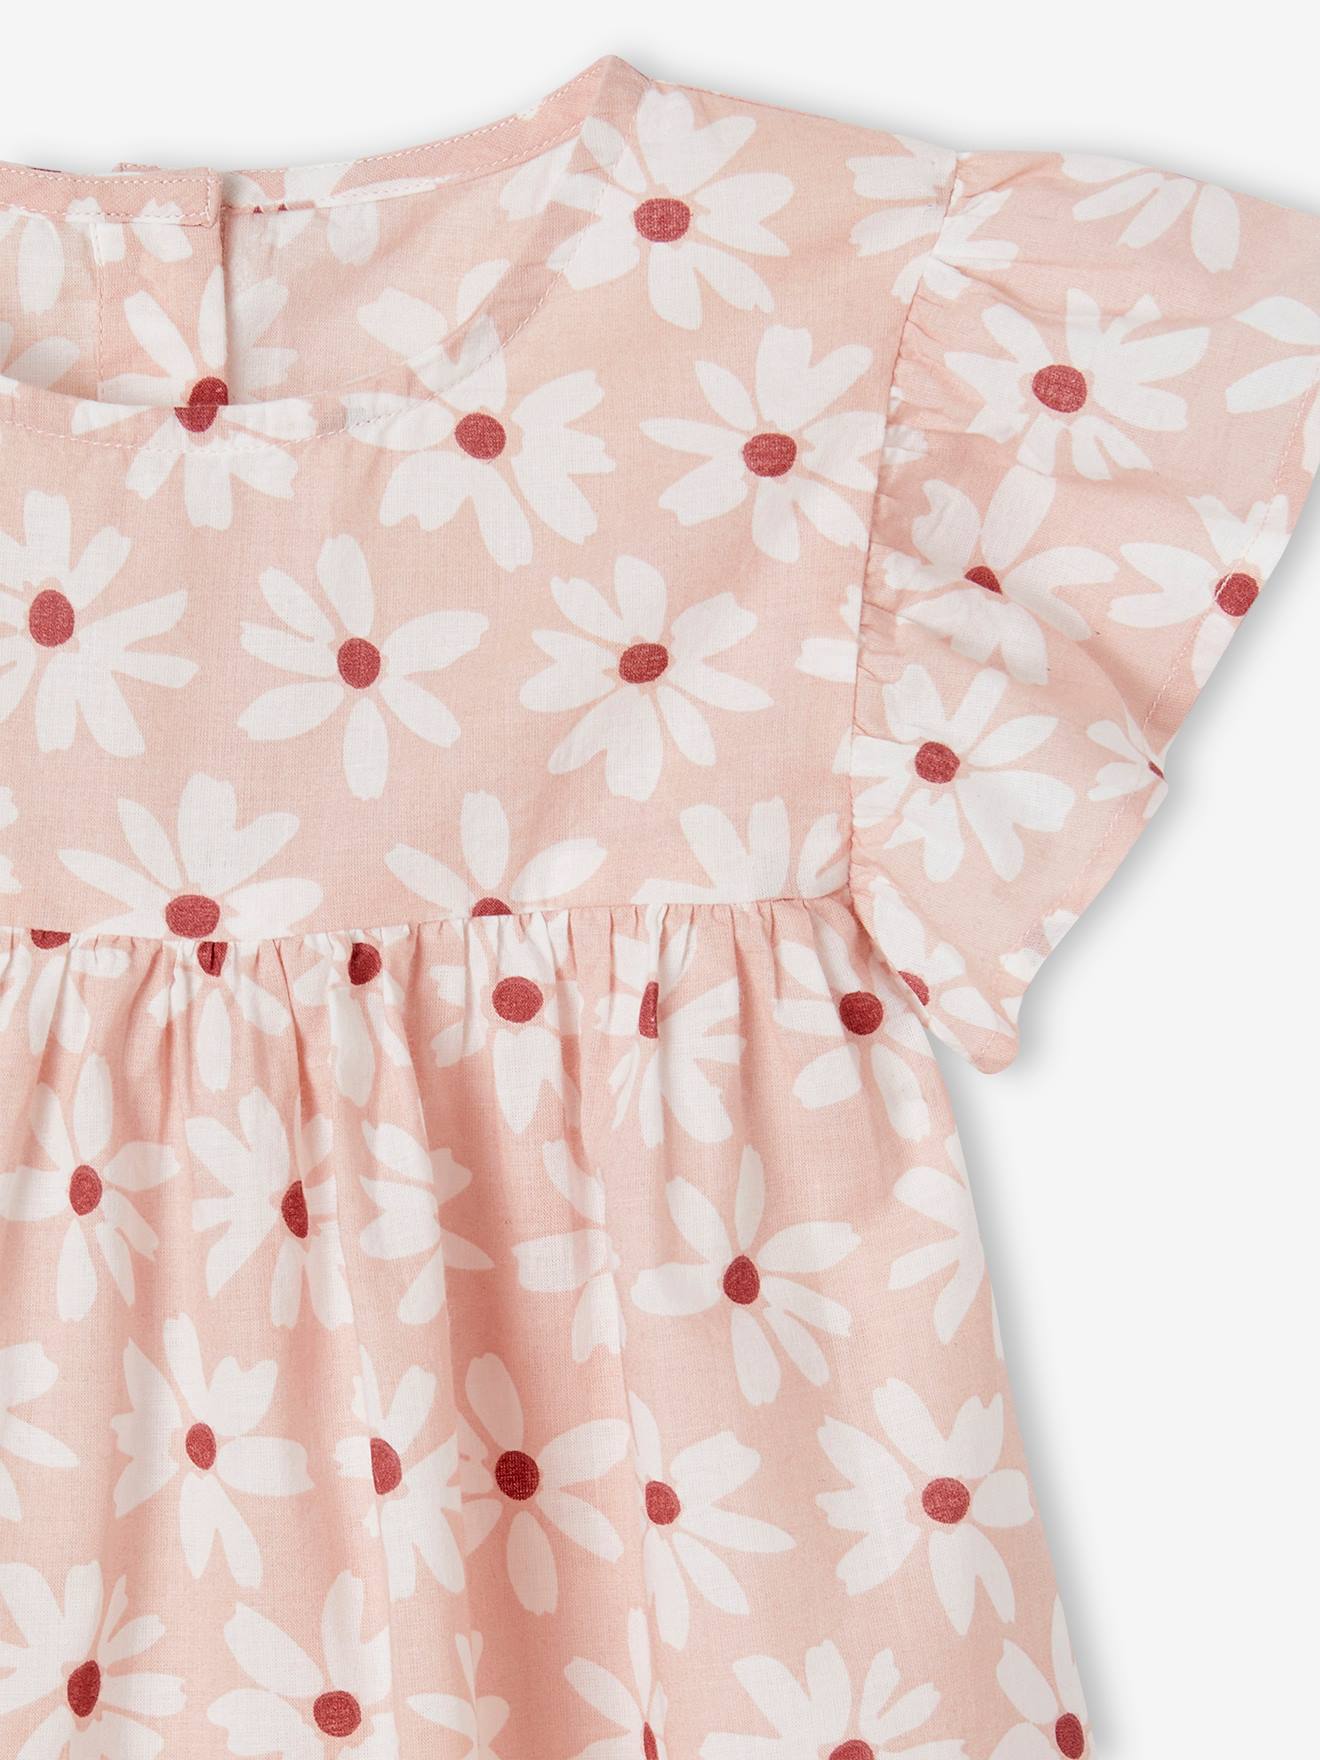 Blusa estampada com folhos, para menina-Menina 2-14 anos-Vertbaudet